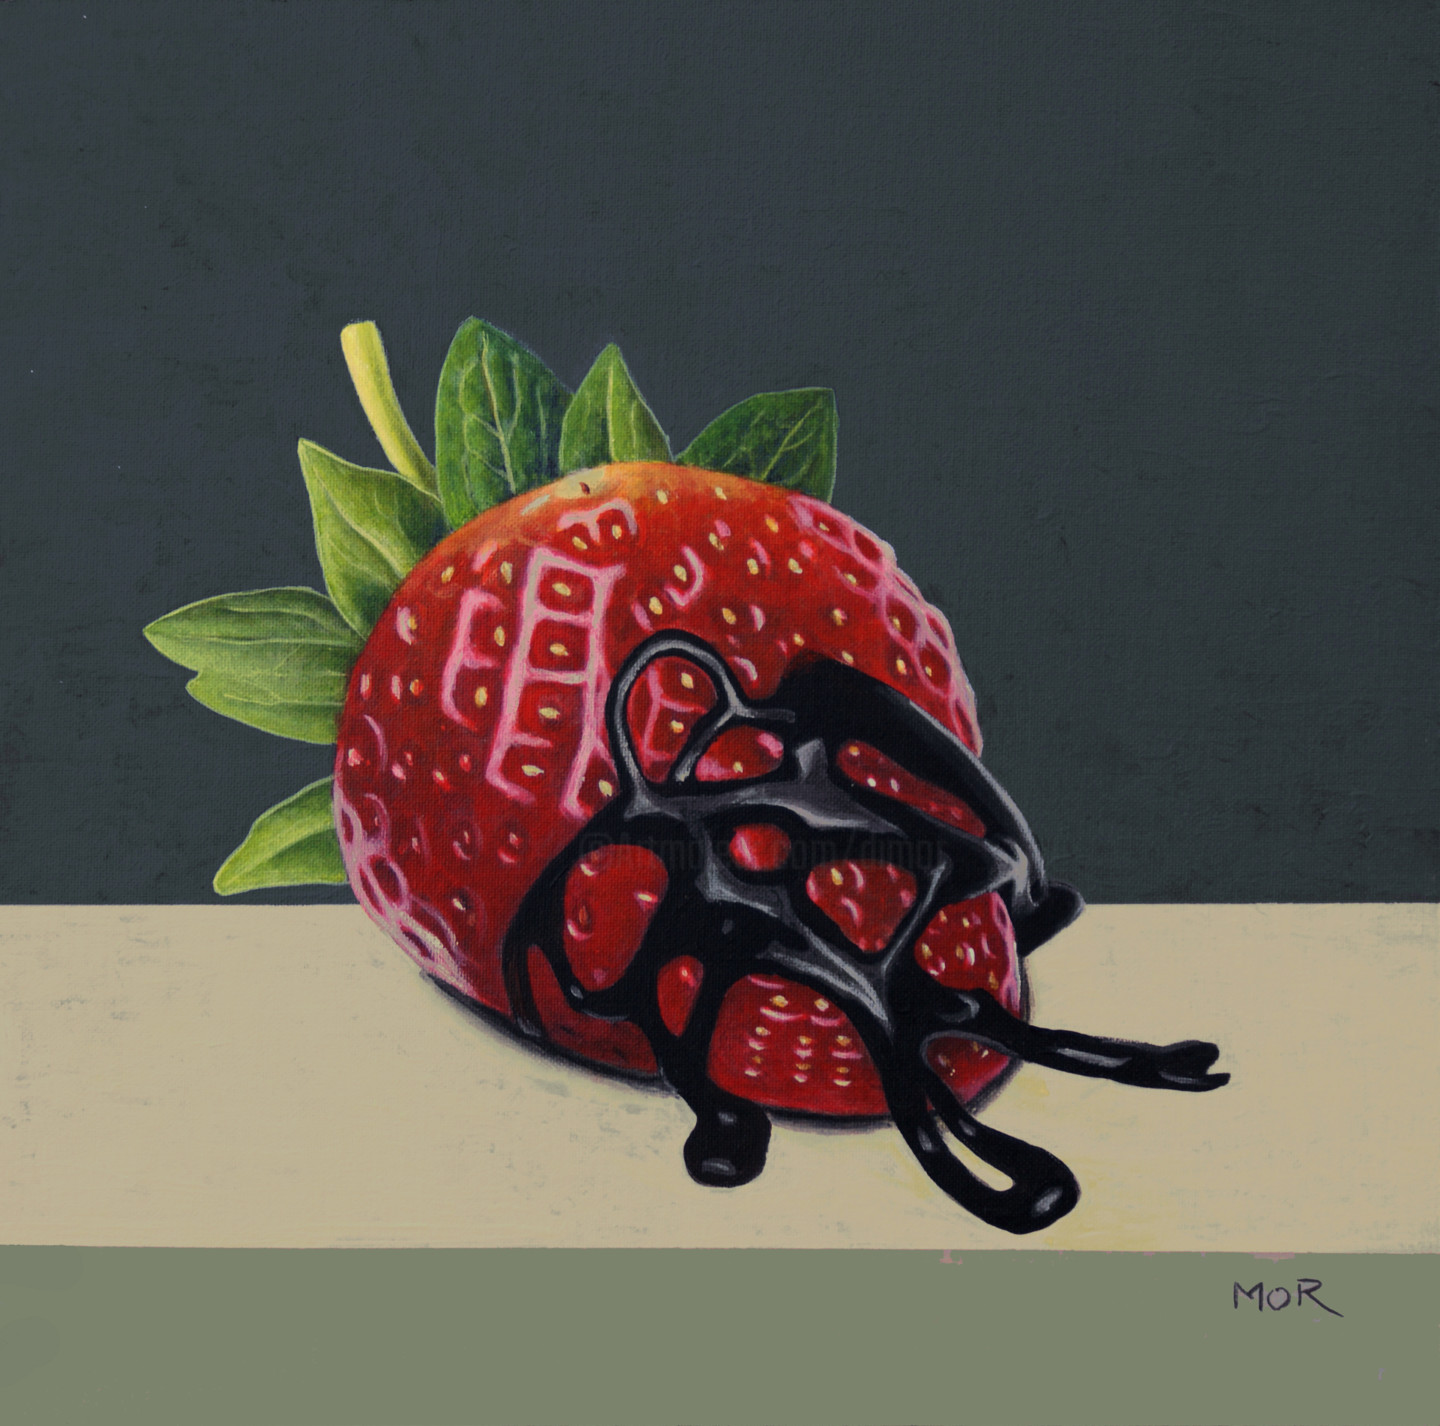 chocolate strawberry drawing